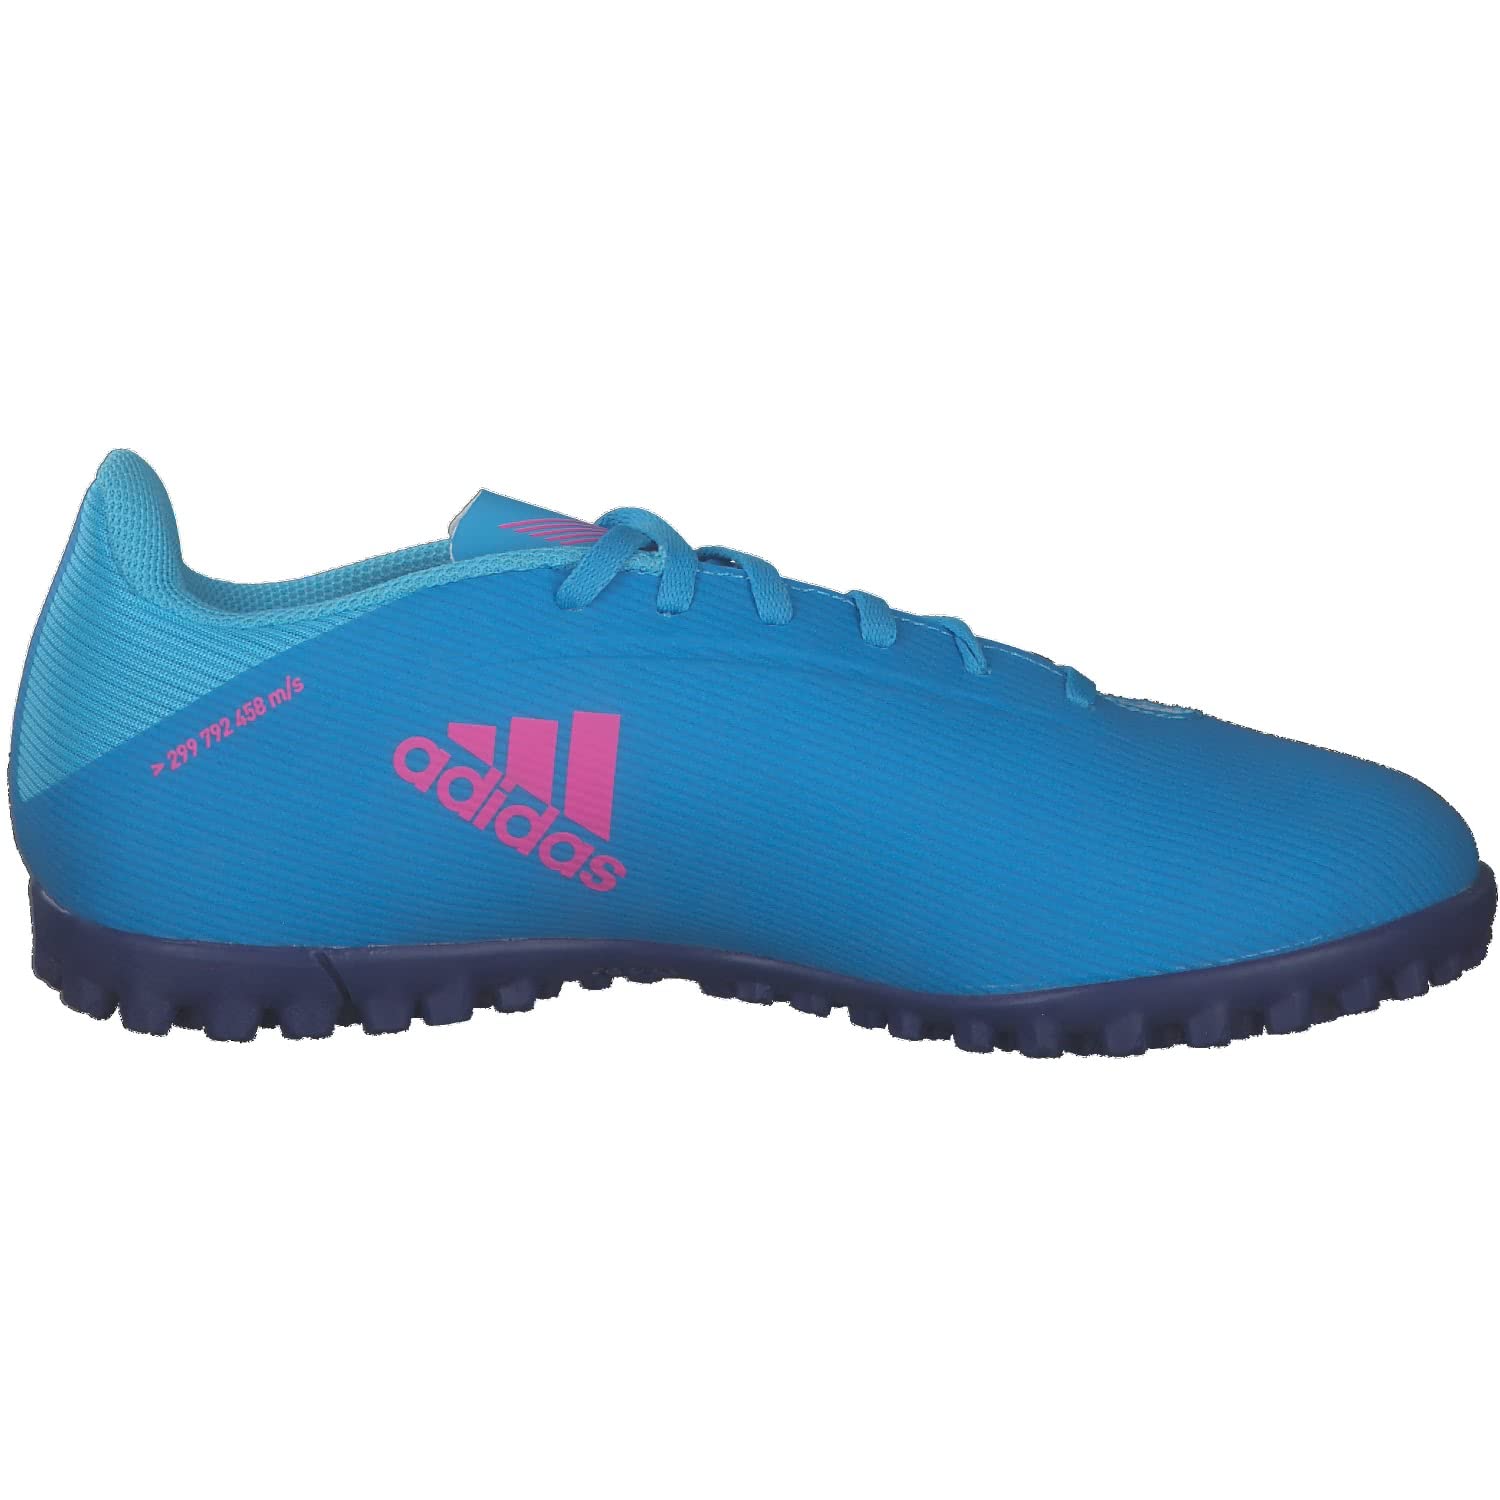 Adidas X Speedflow.4 TF Football Shoes - SKYRUS/TMSHPN/LEGIND - Best Price online Prokicksports.com